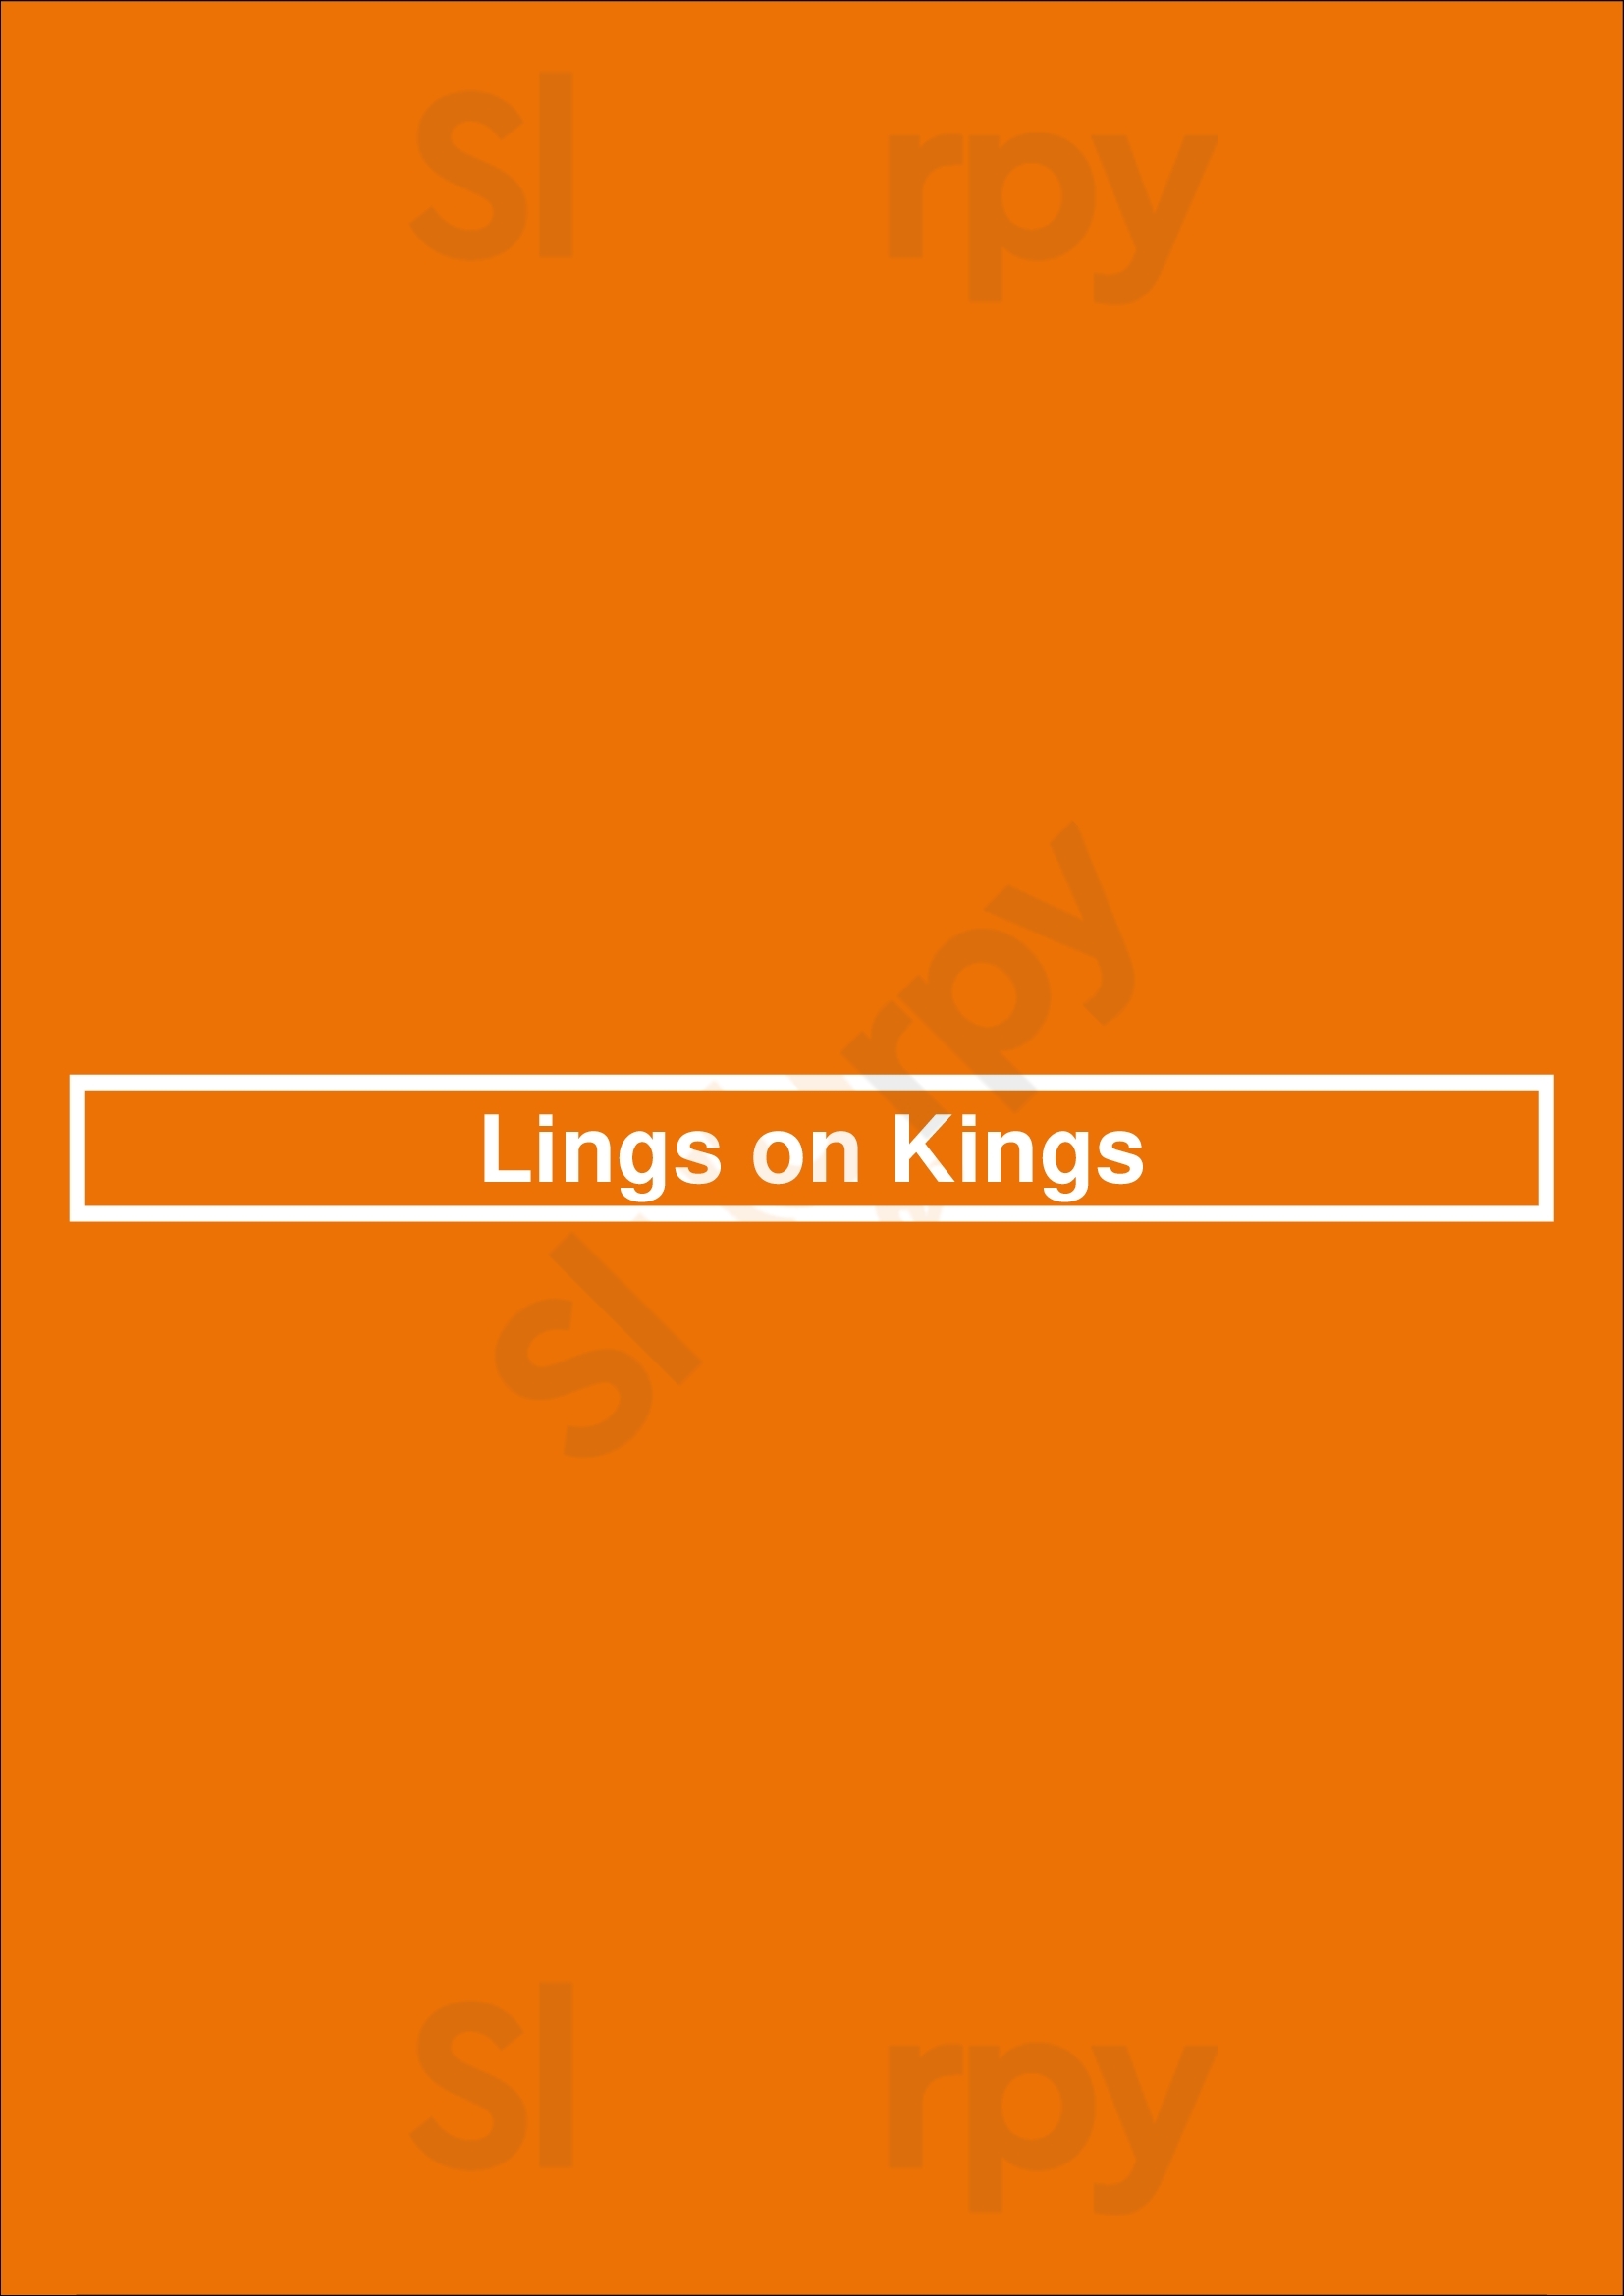 Lings On Kings Southport Menu - 1